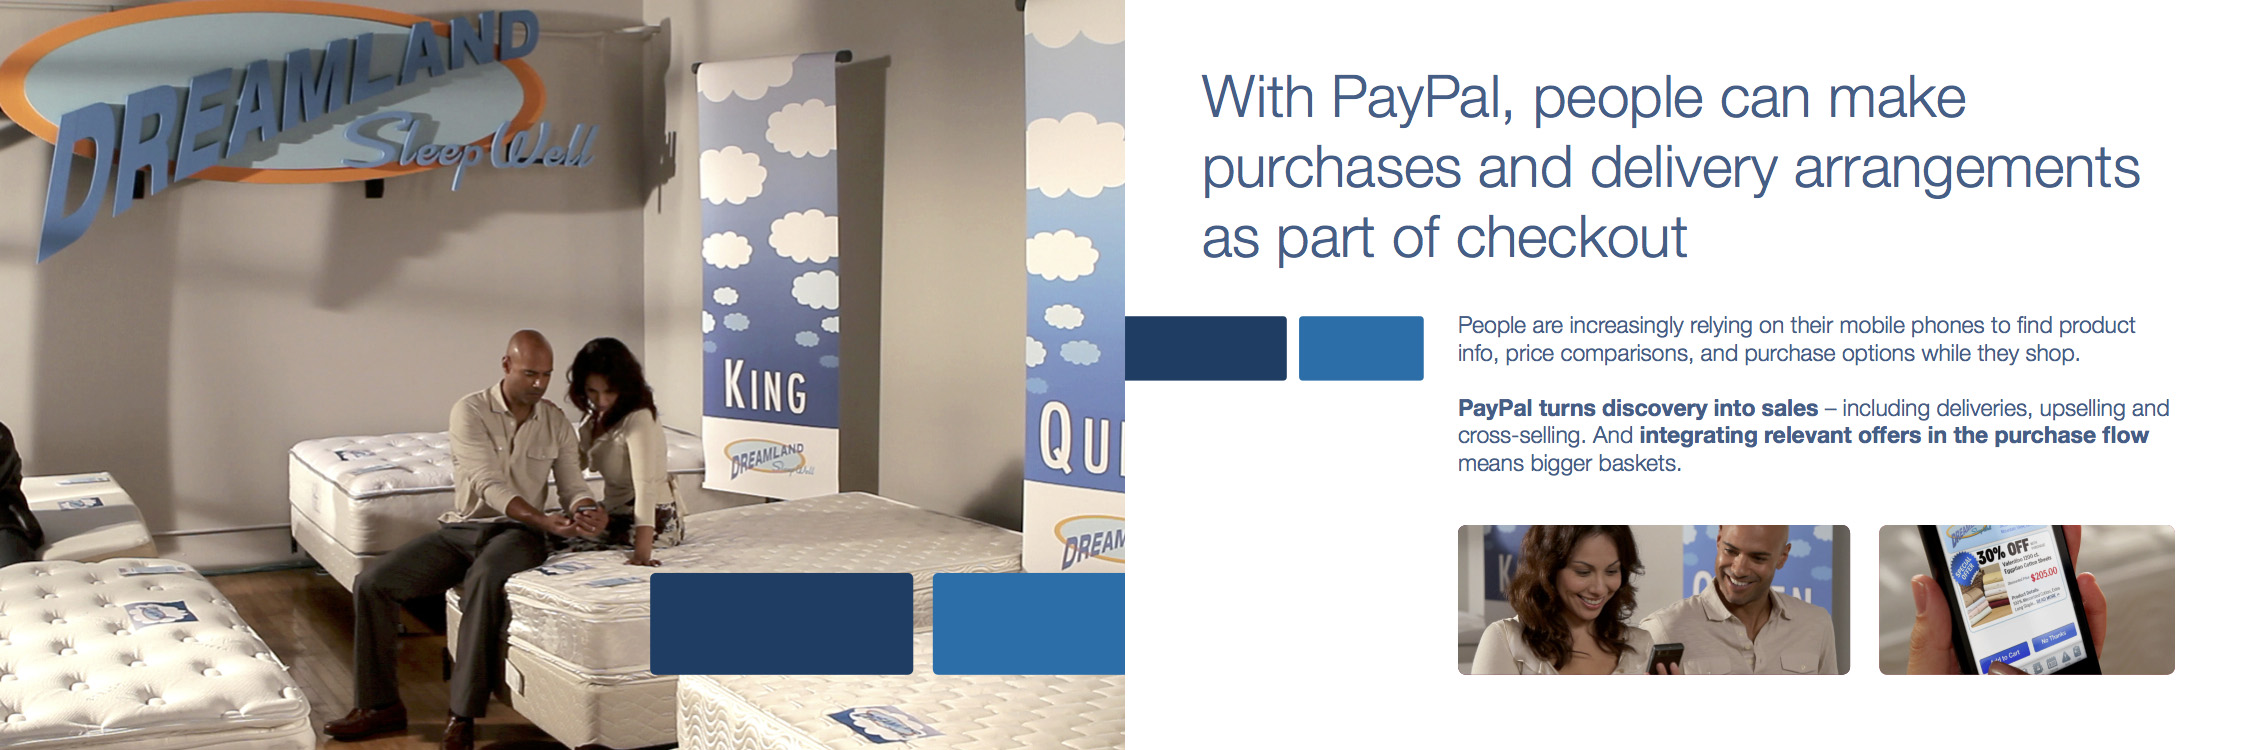 PayPal Shopping Showcase Booklet 9.jpg